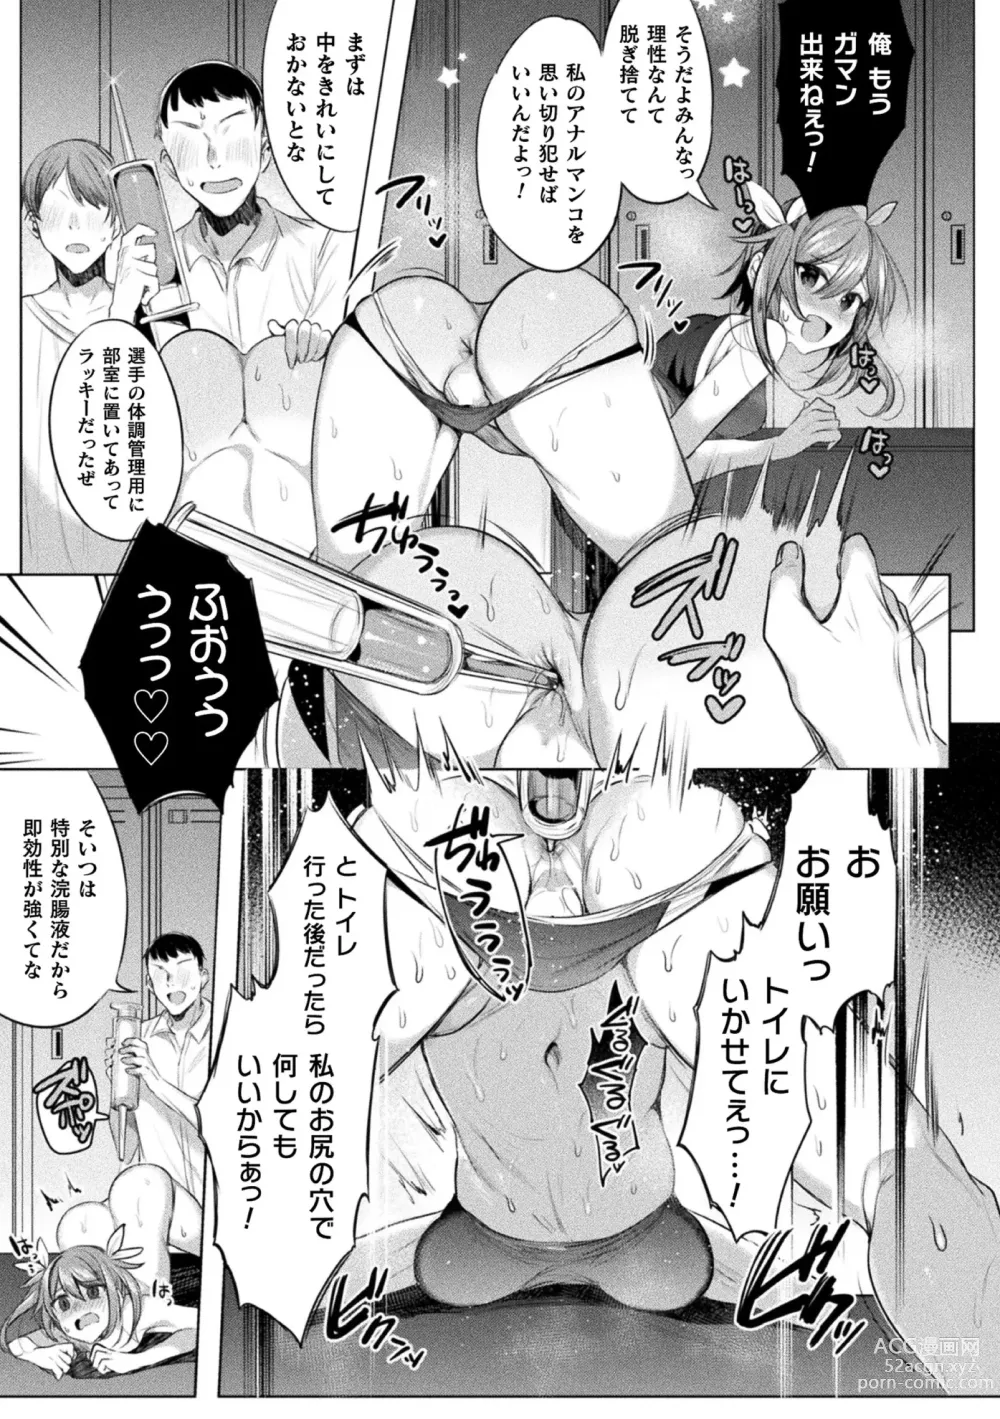 Page 147 of manga Kukkoro Heroines Vol. 27